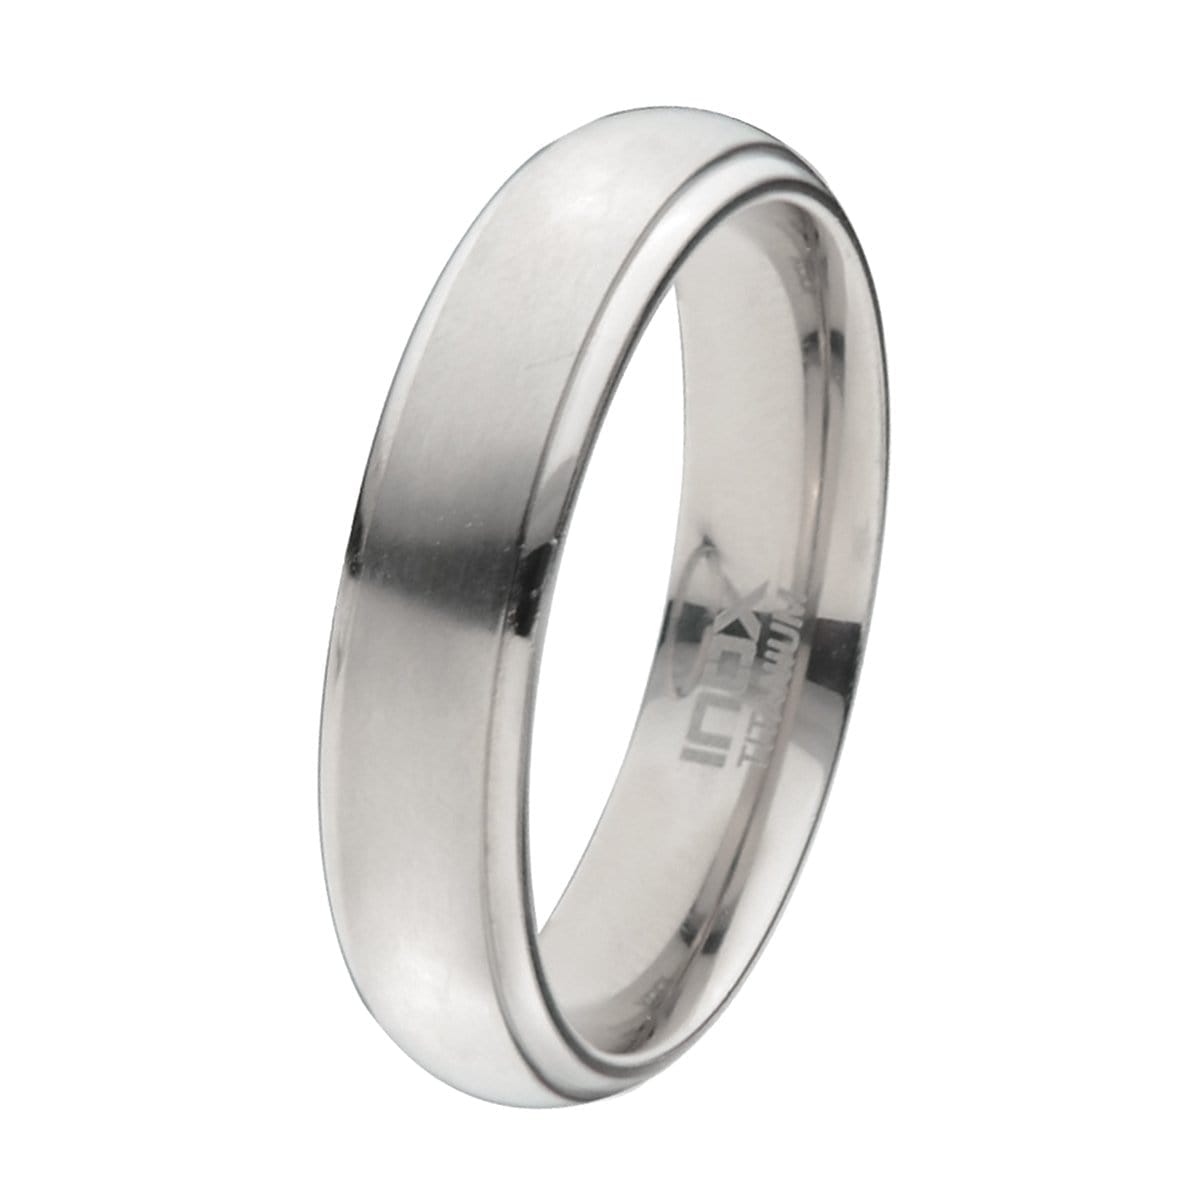 INOX JEWELRY Rings Silver Tone Titanium 5mm Matt and Polished Edge Band Ring